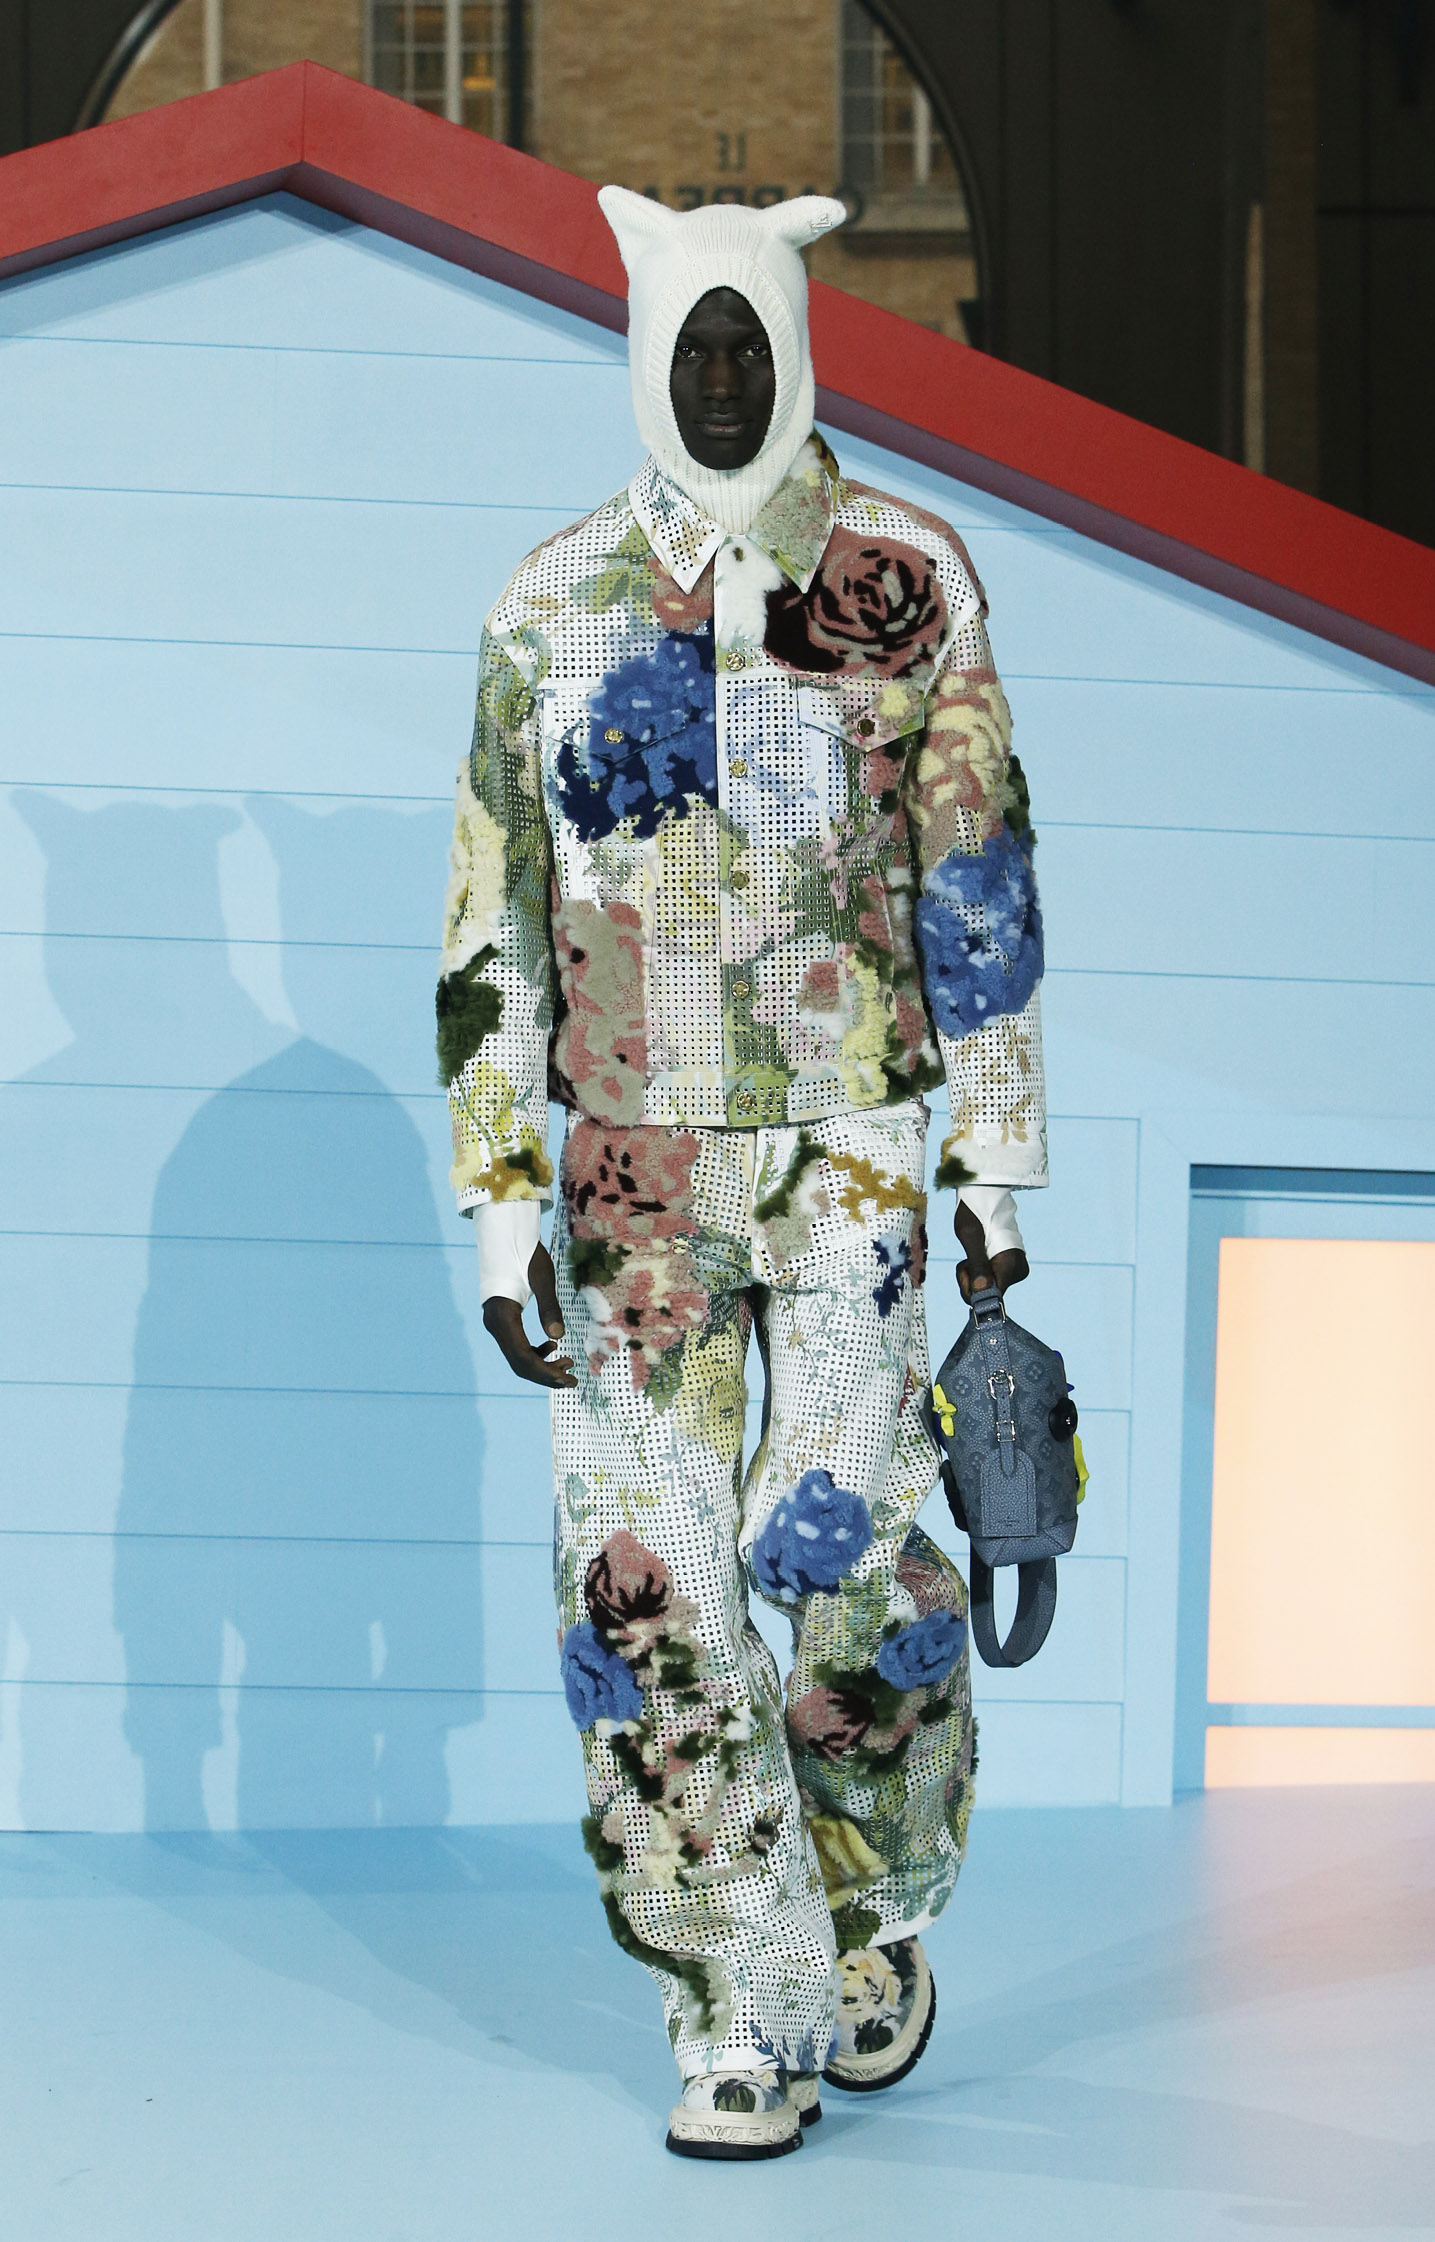 MANIFESTO - THE “DREAMHOUSE” THAT VIRGIL BUILT: Louis Vuitton's Fall-Winter  2022 Menswear Show